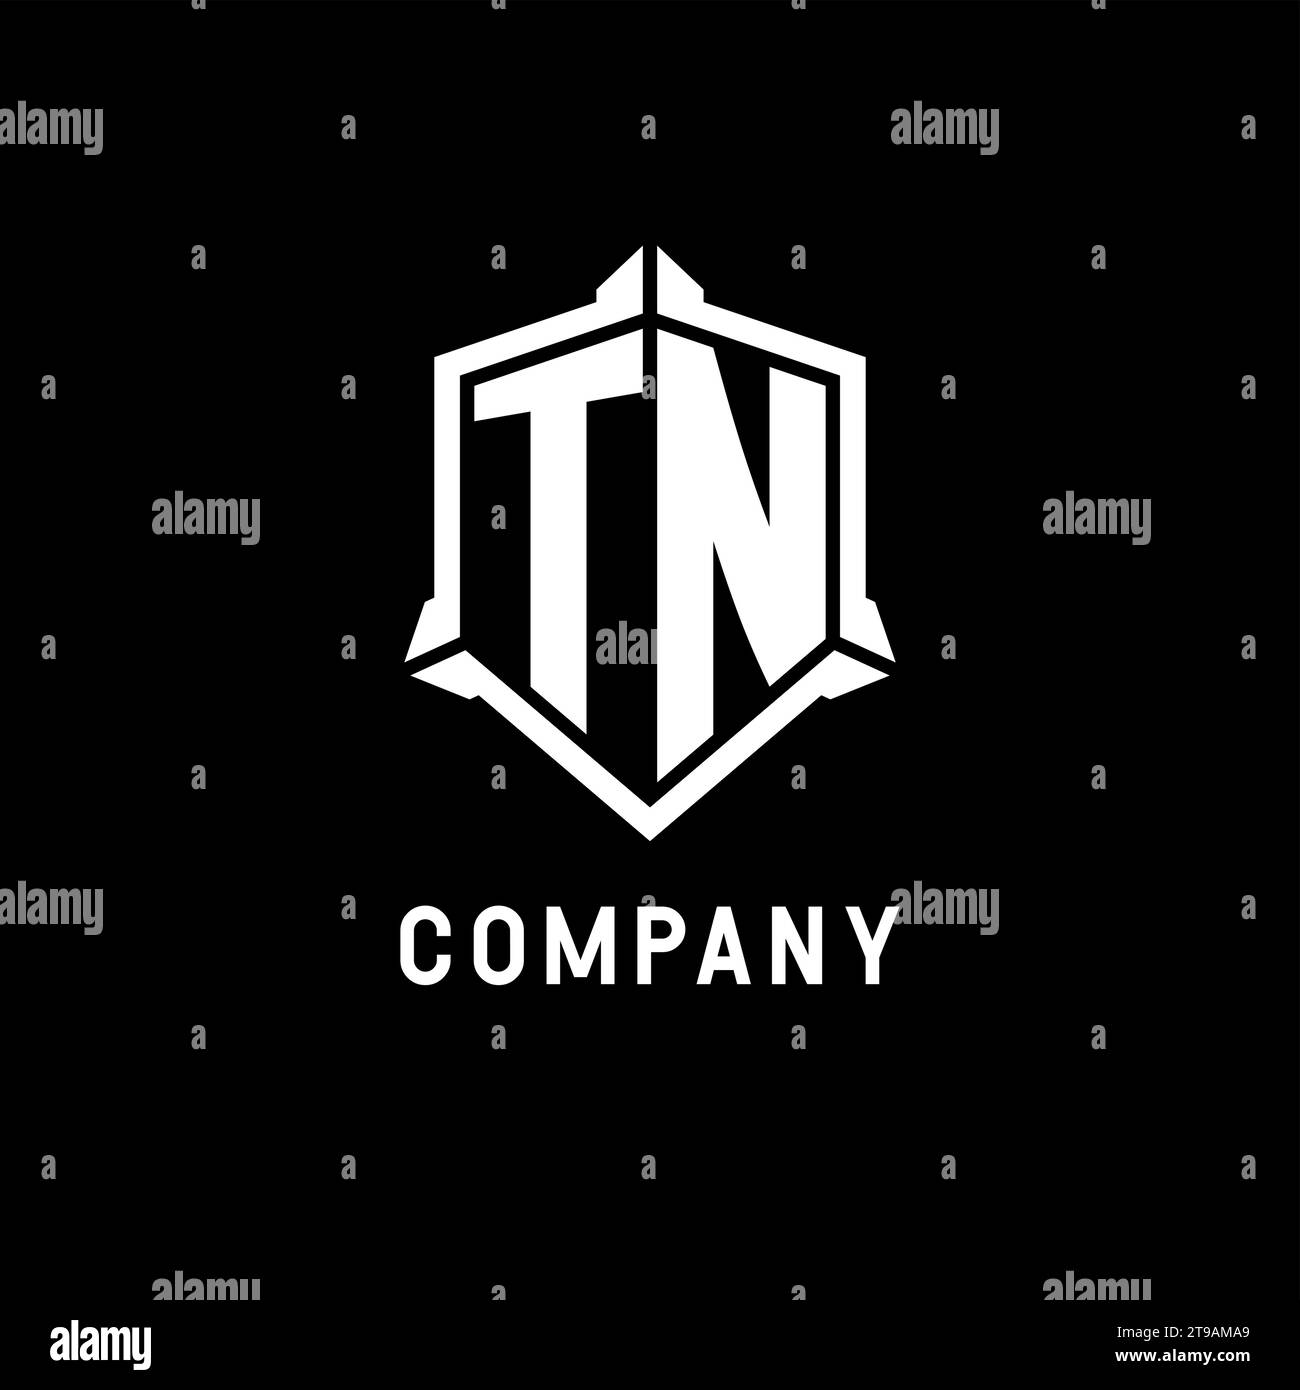 Tn logo monogram emblem style with crown shape Vector Image